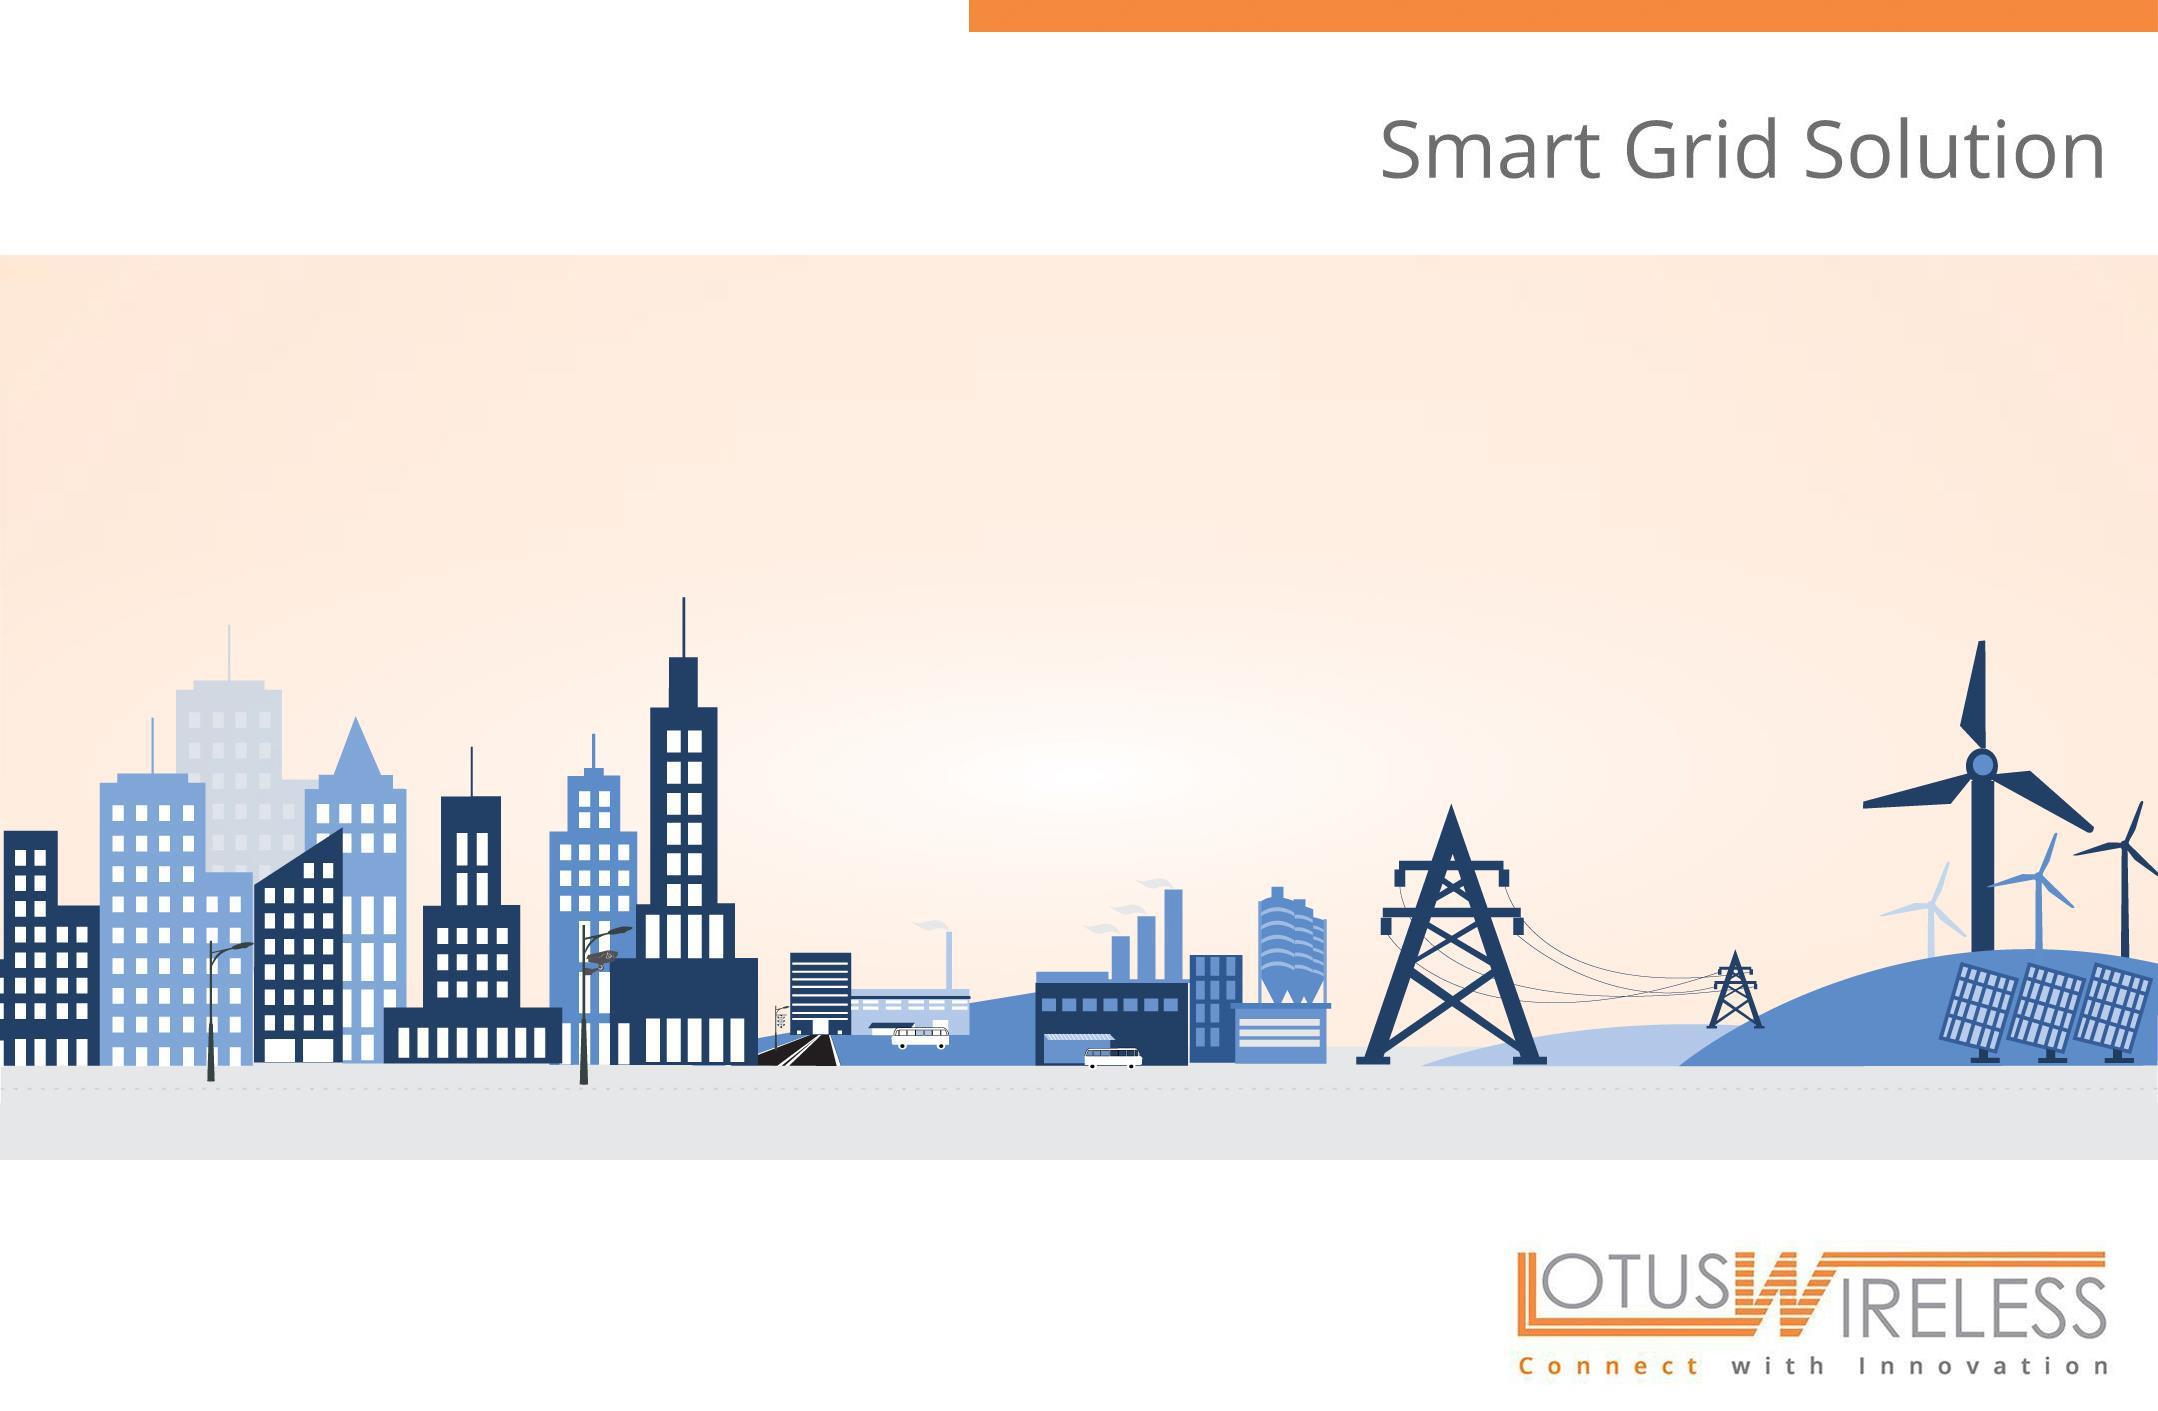 lotus_wireless_smart_grid